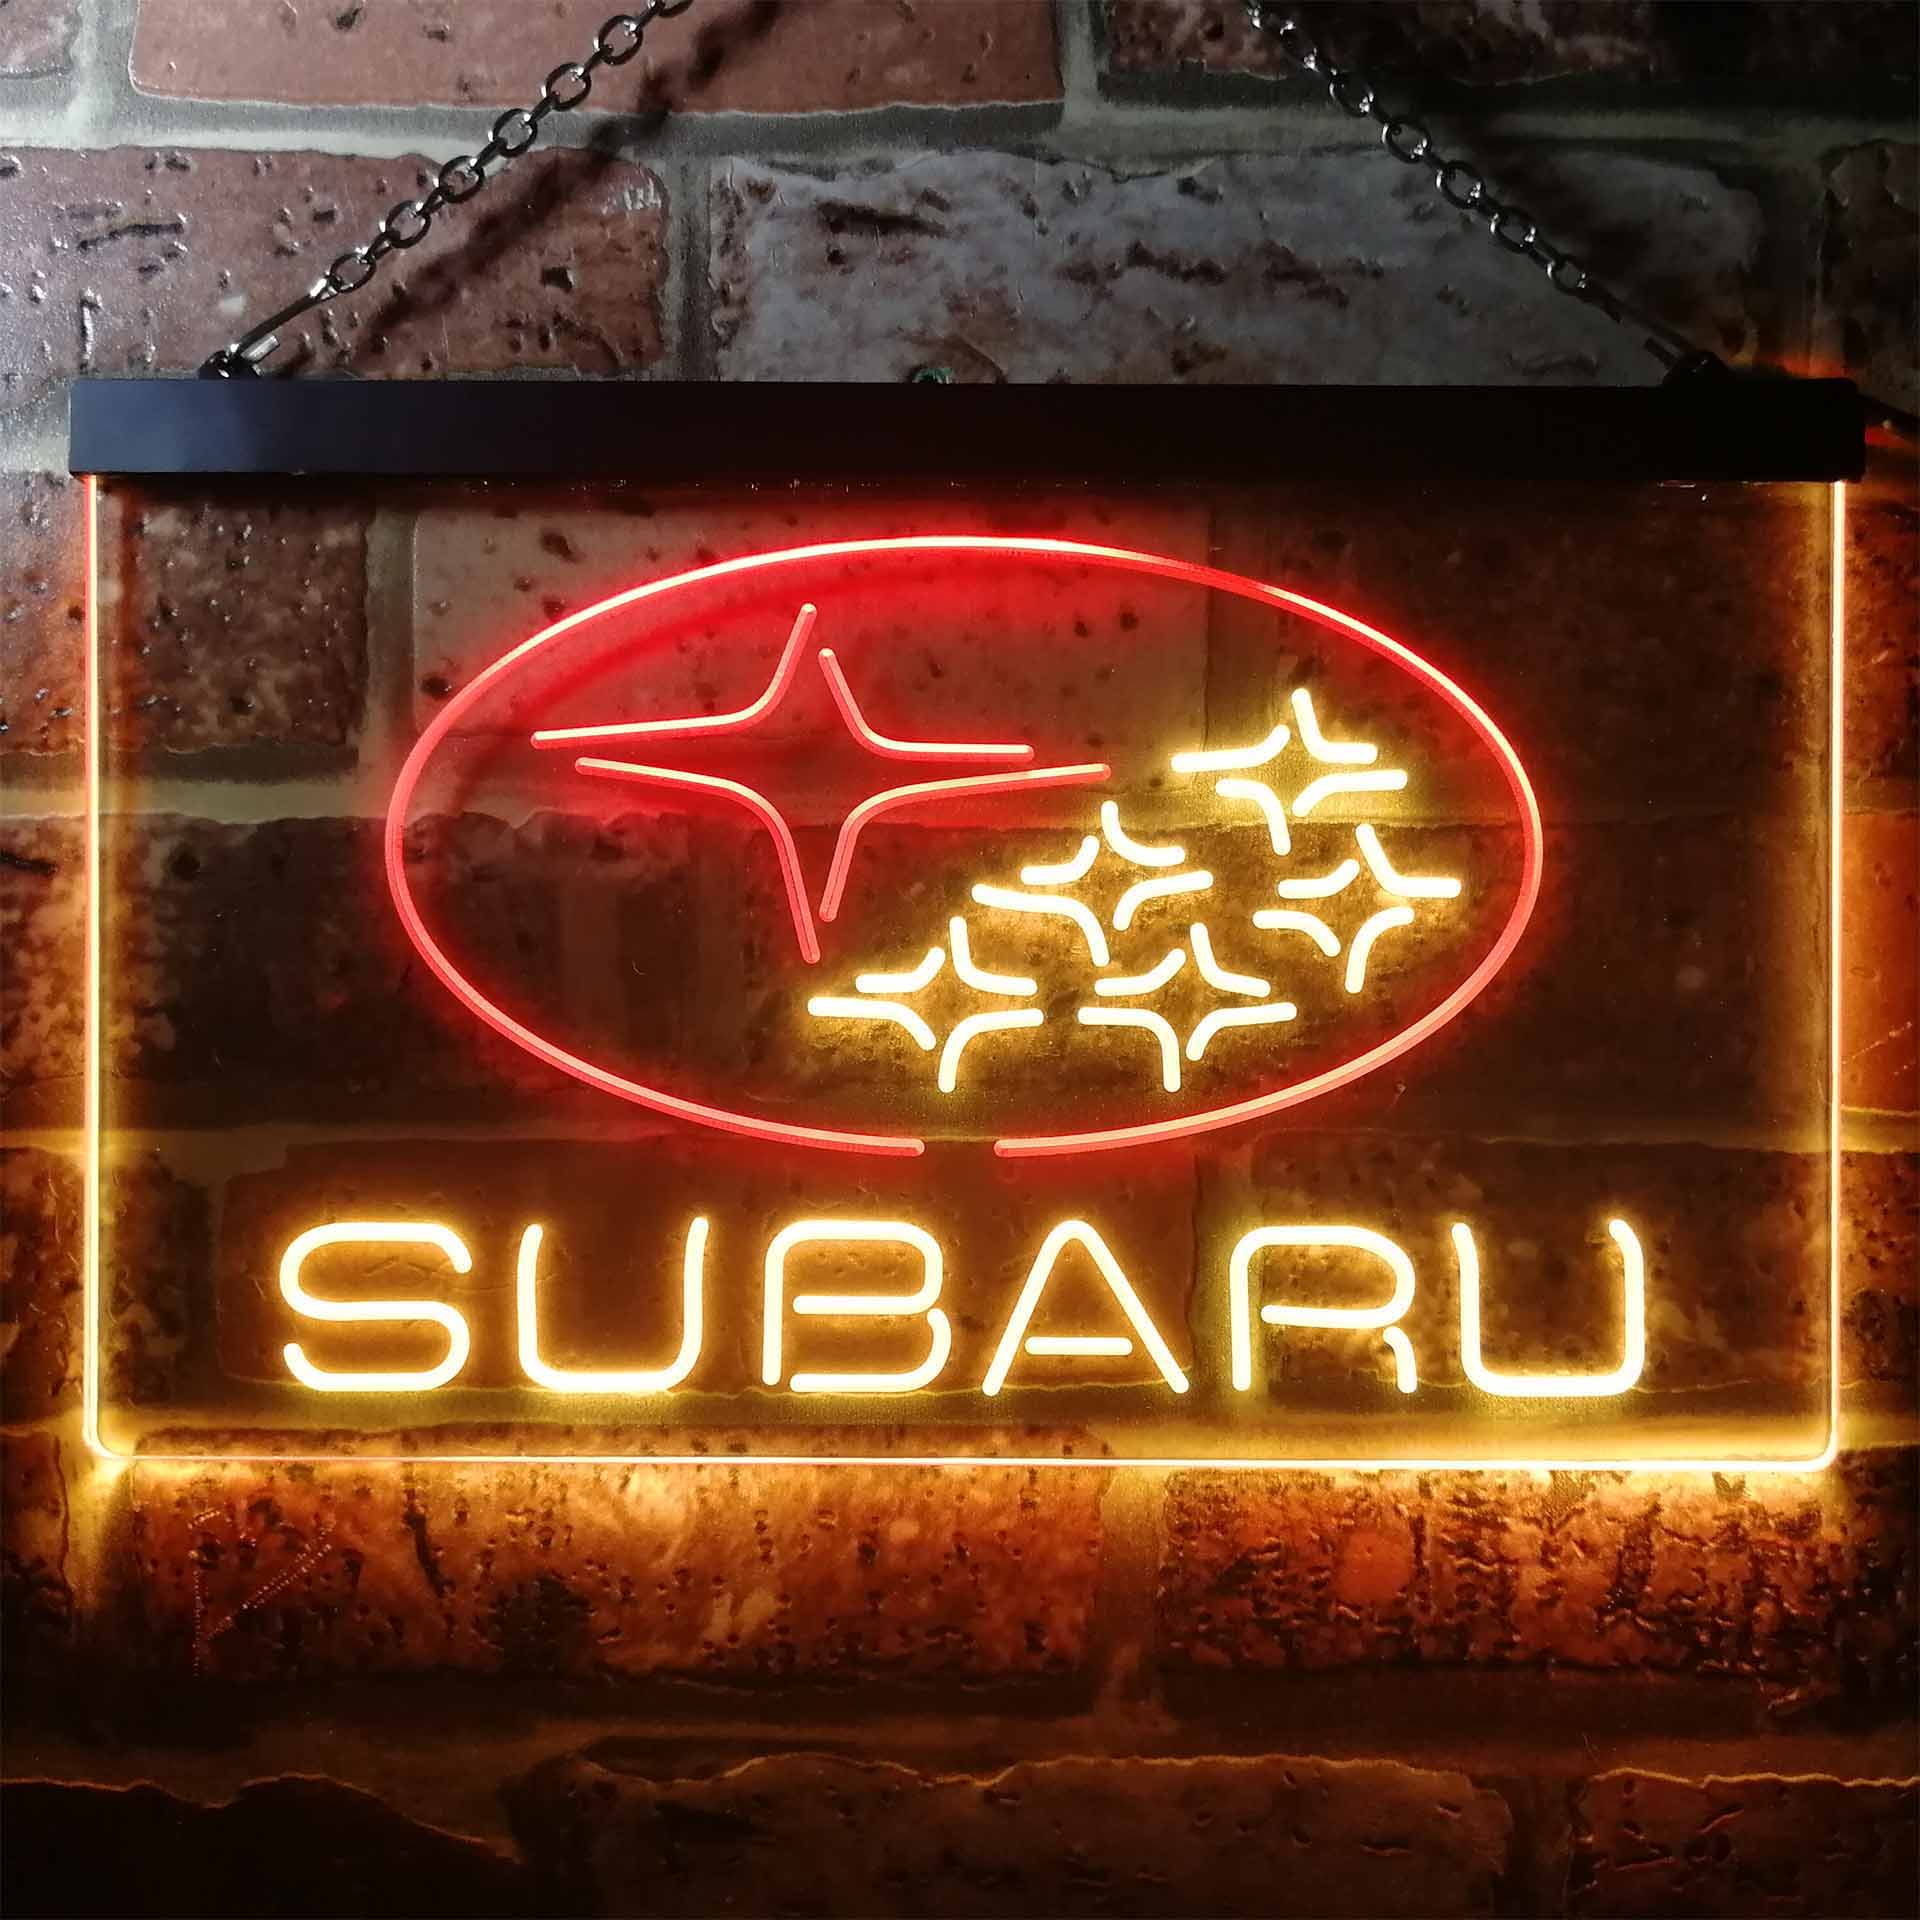 Subaru Neon LED Sign